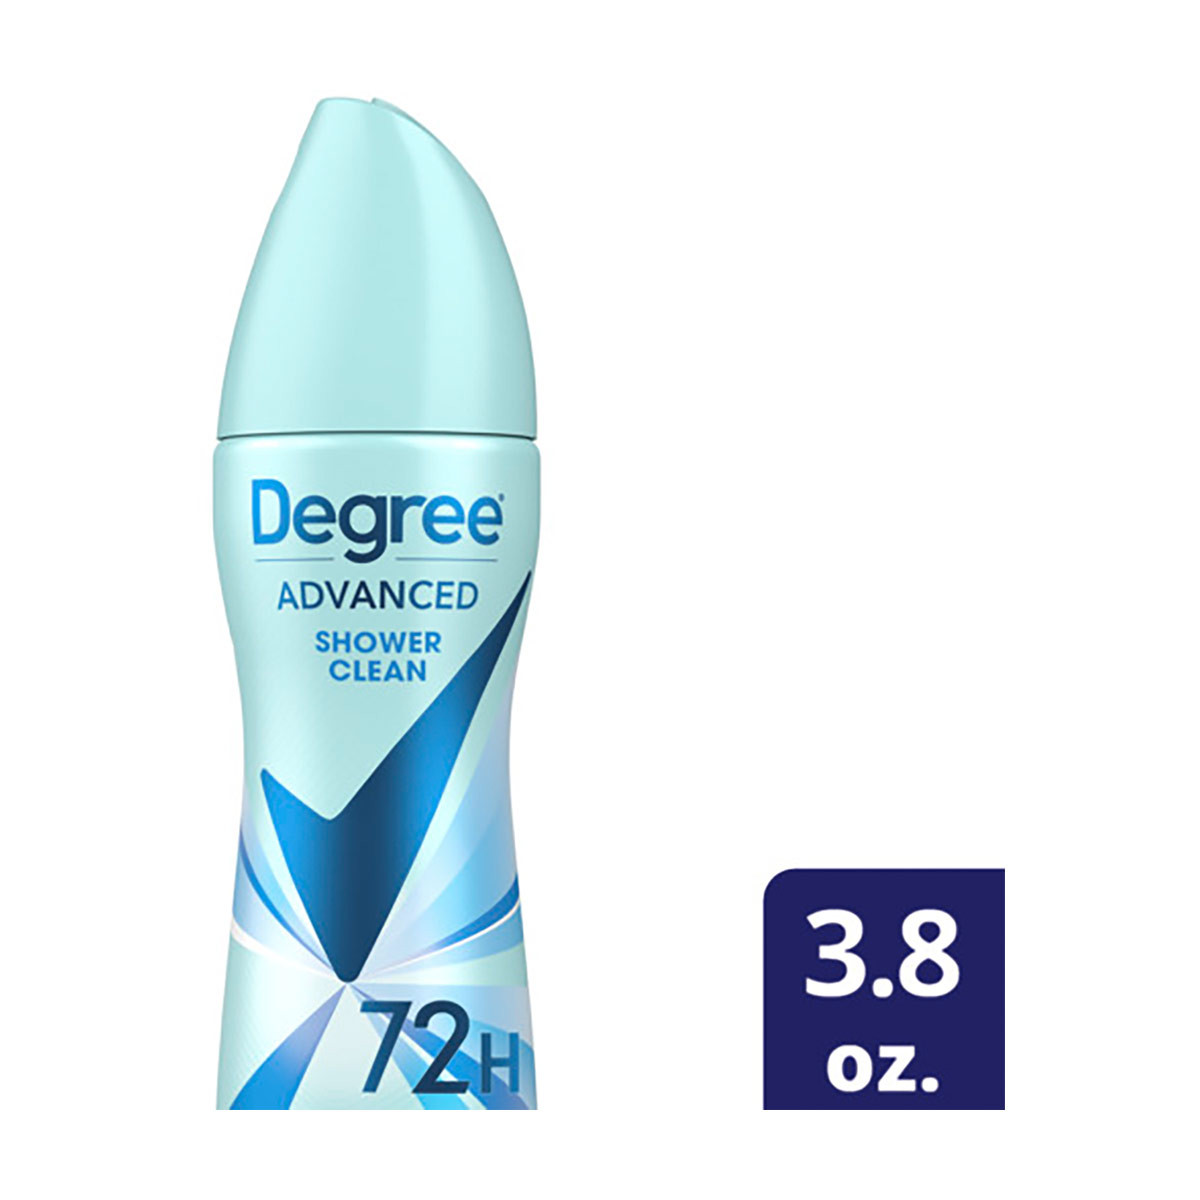 Degree Advanced Shower Clean Antiperspirant Deodorant Dry Spray, 3.8 oz